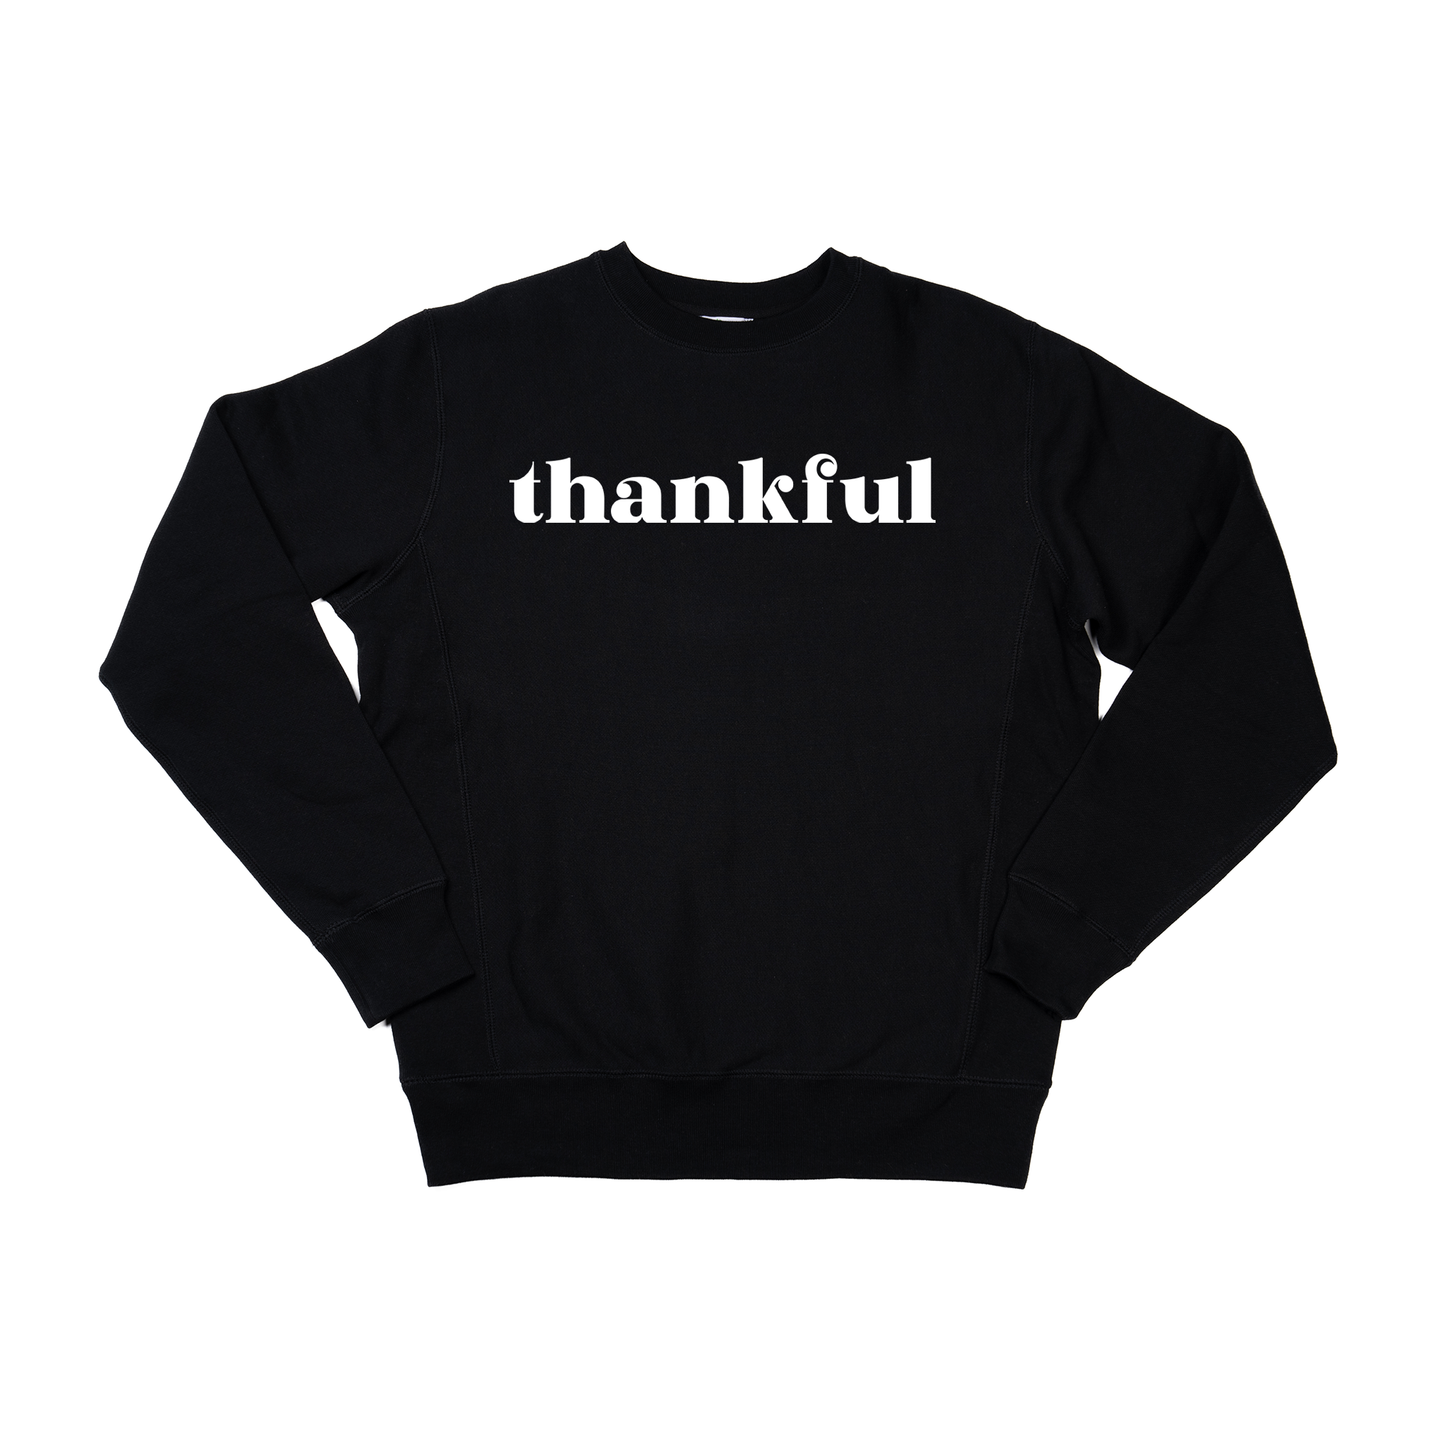 Thankful (White) - Heavyweight Sweatshirt (Black)